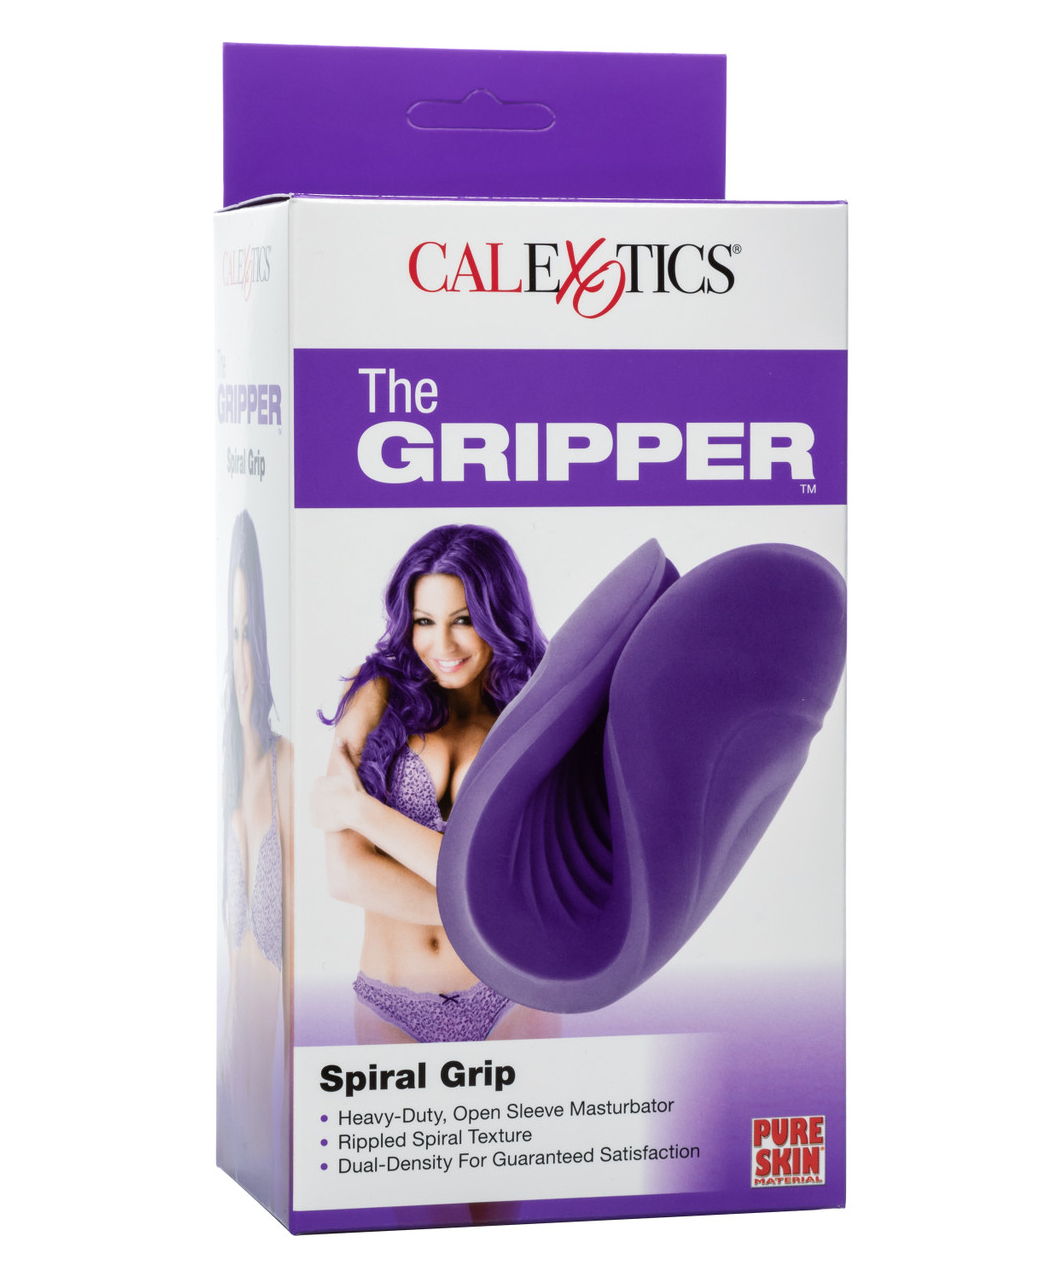 CalExotics The Gripper Spiral masturbaator